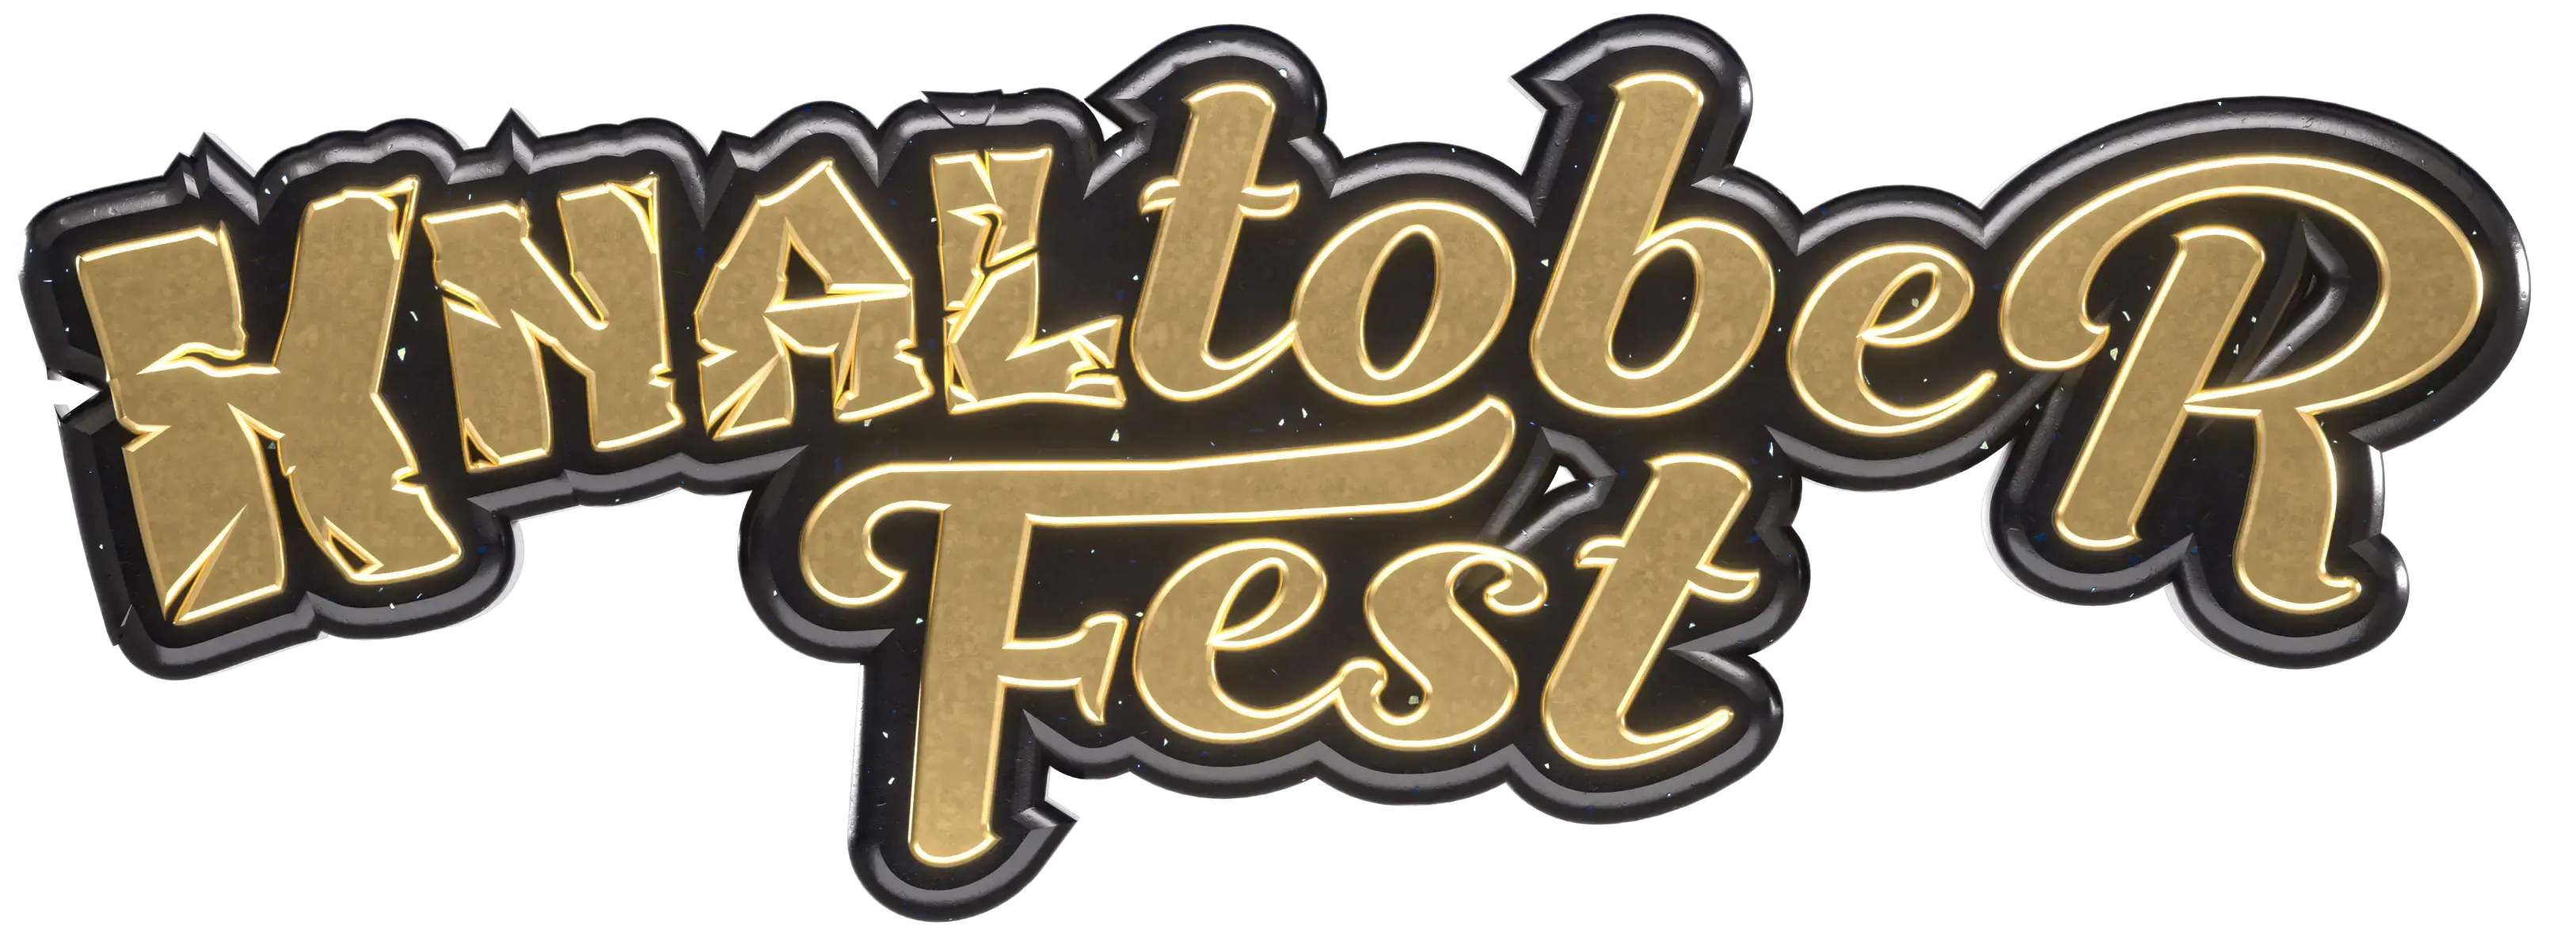 Knaltoberfest logo